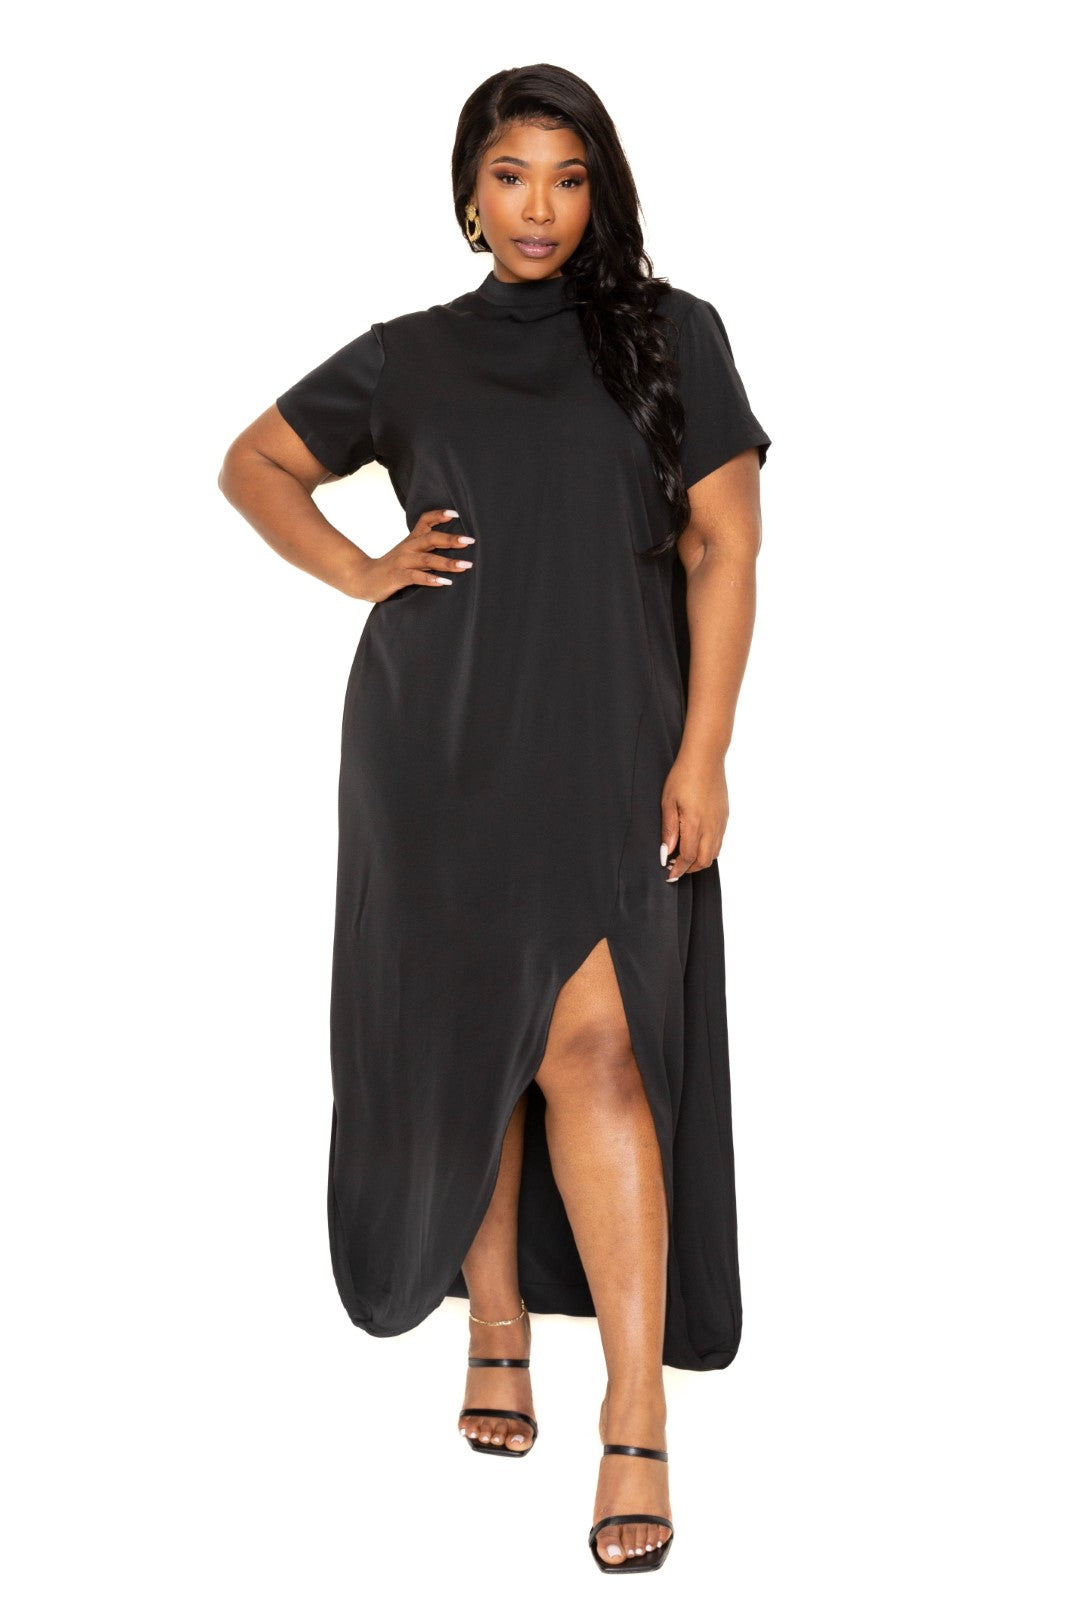 Imported Mock Neck Back Cape Dress in Black - Plus Size